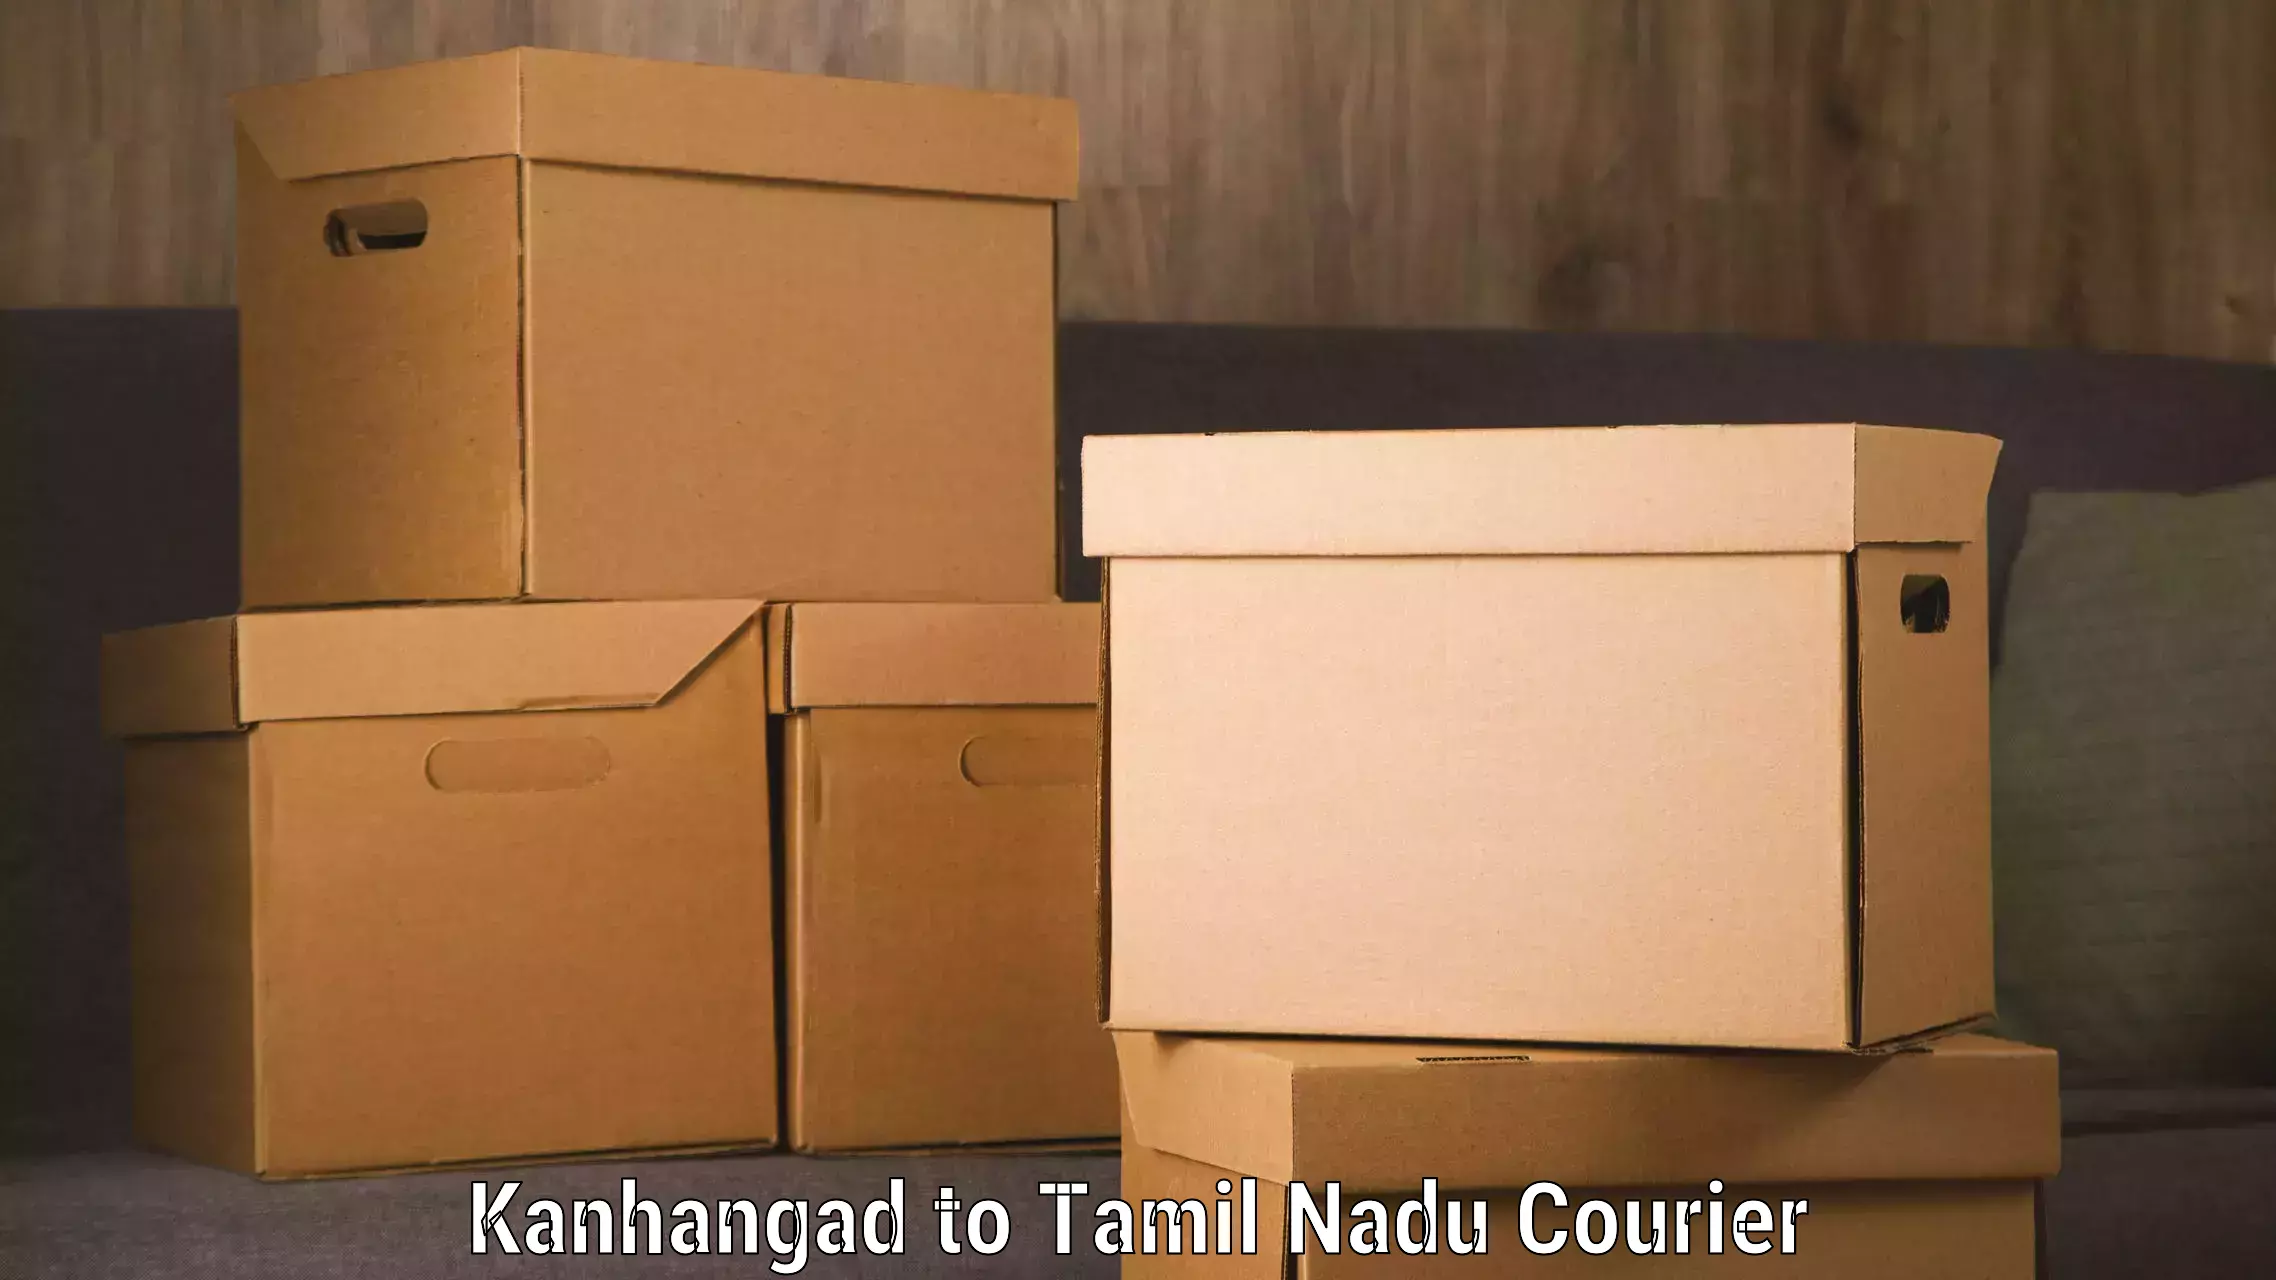 Logistics service provider Kanhangad to Tamil Nadu